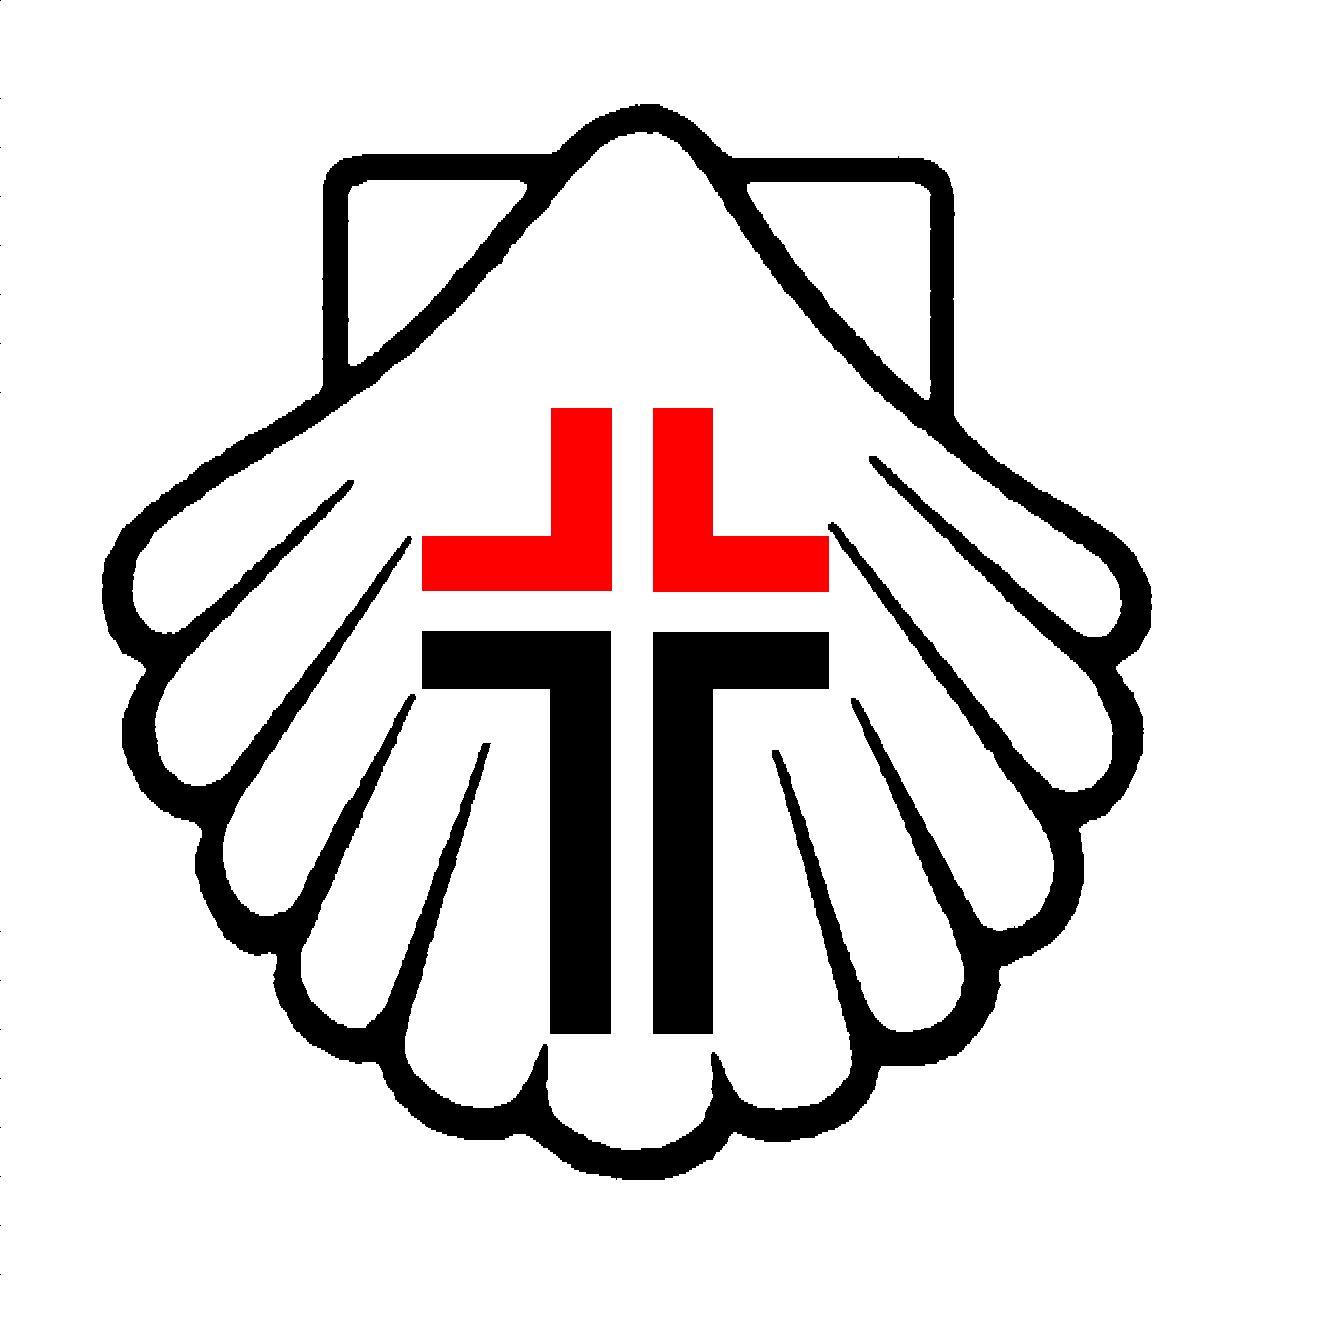 MCSA Logo - The Methodist Church of Southern Africa logo – MCSA